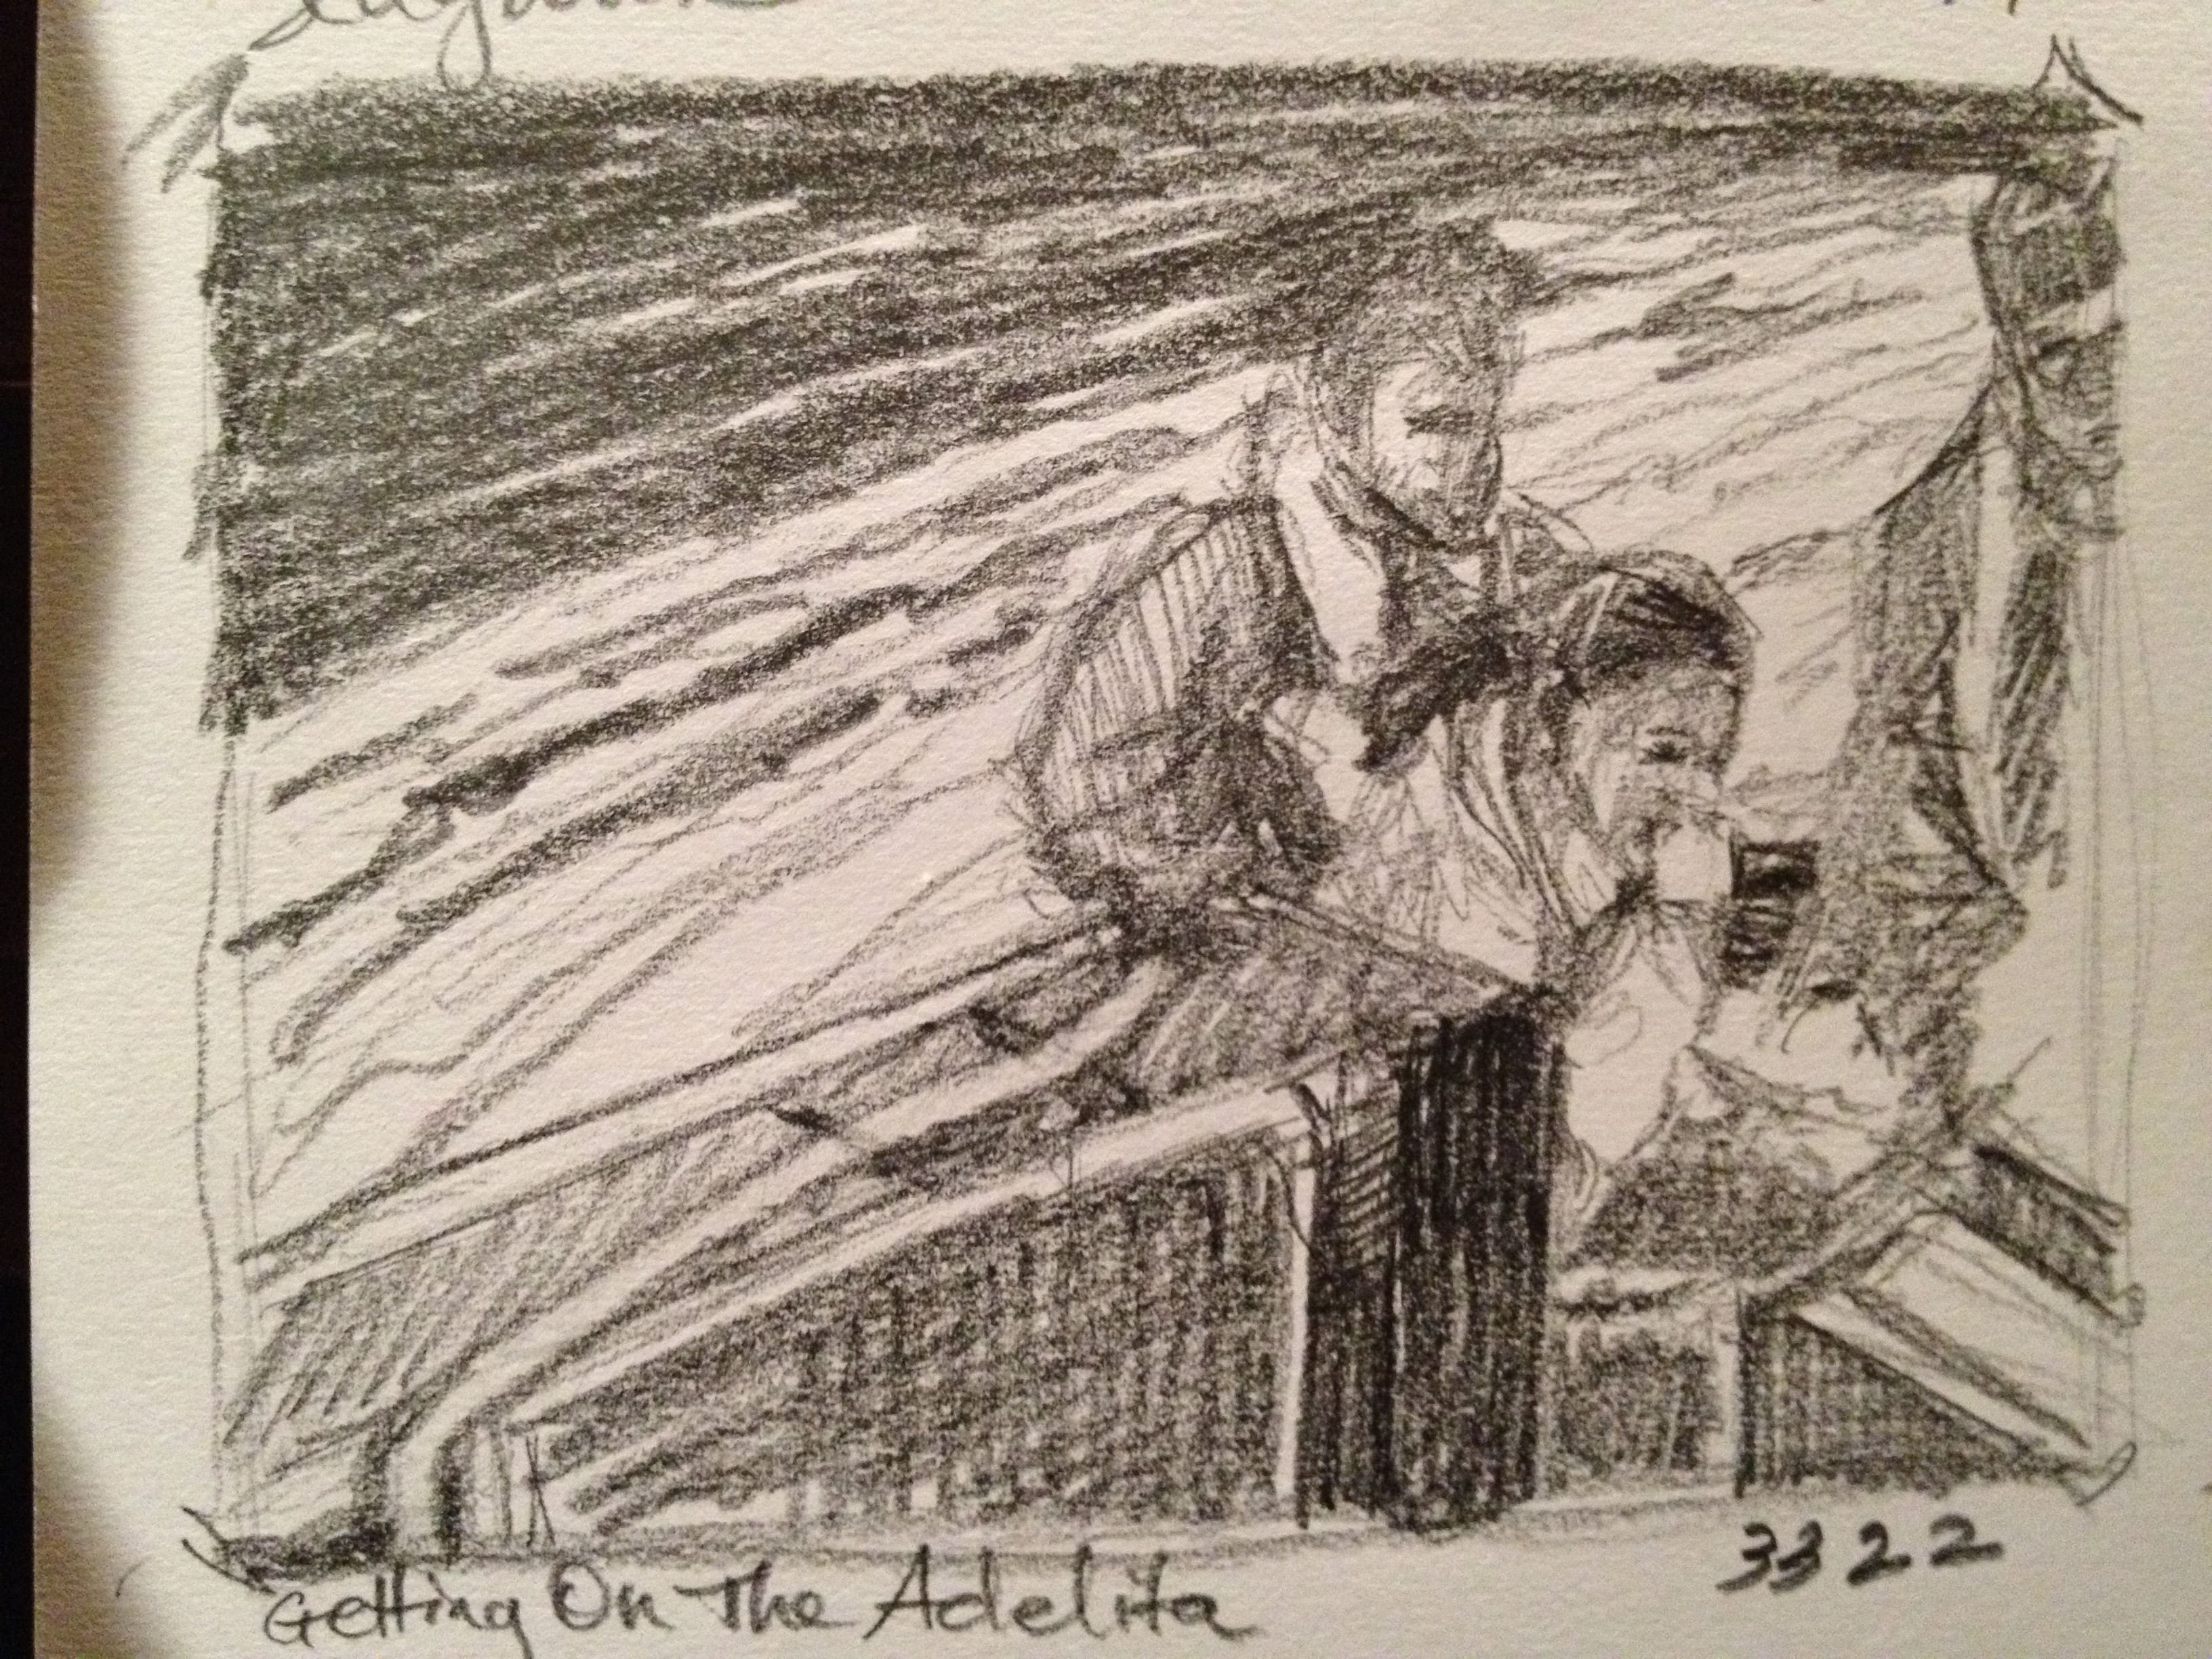 Getting On The Adelita at Sedgwick Bay - Thumbnail sketch ©2012 Janice Tanton.